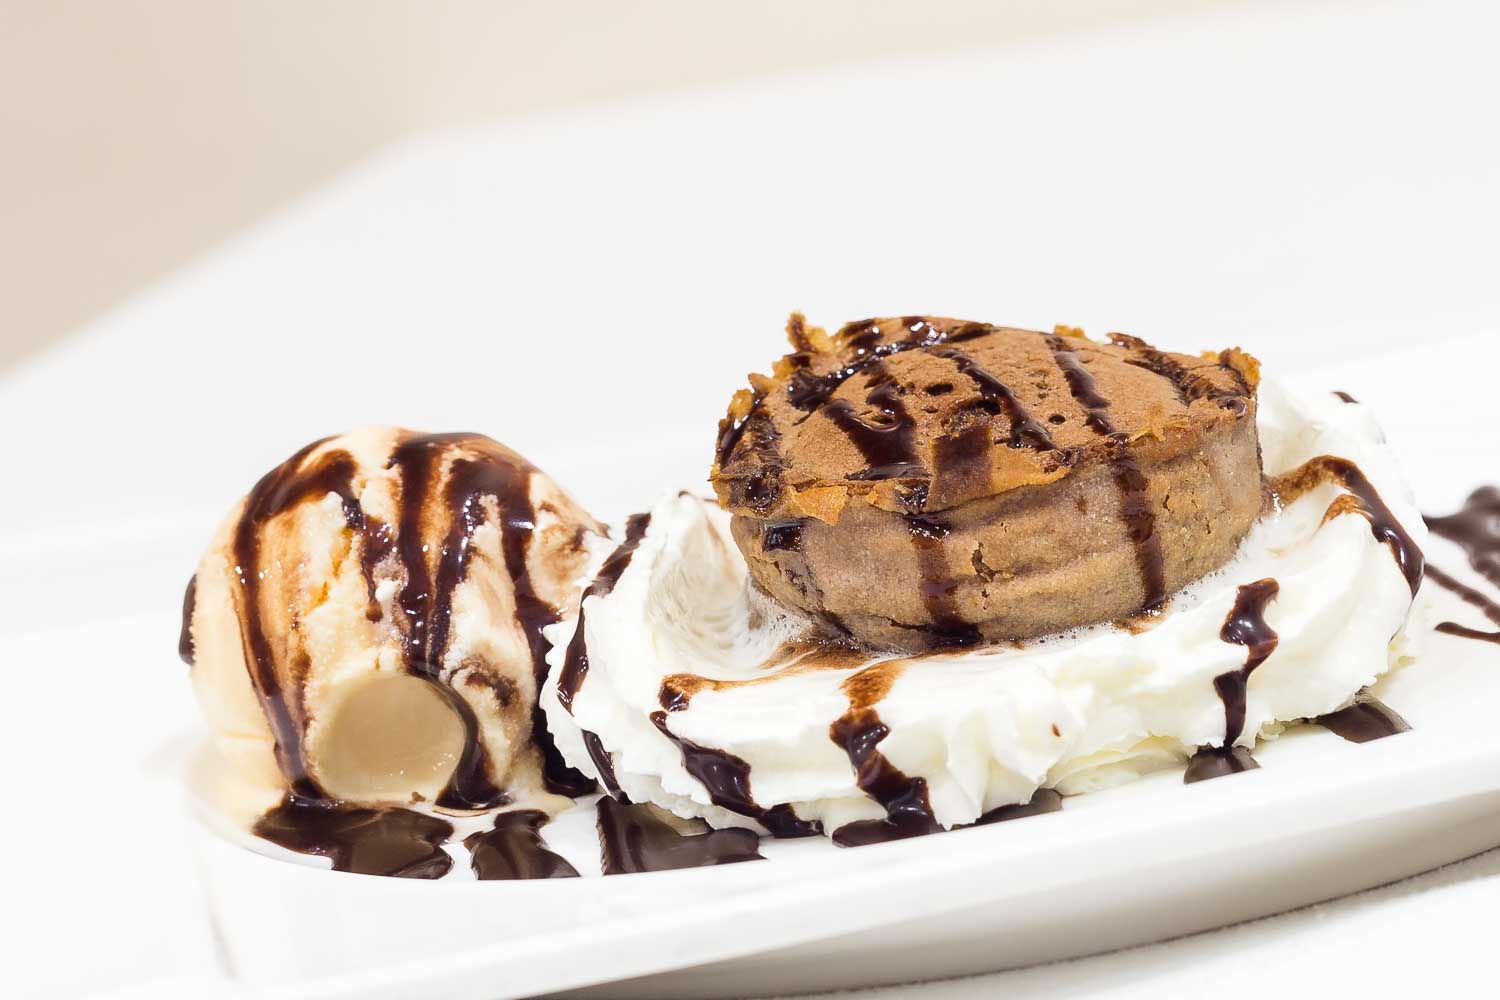 Chocolate fondant with ice cream